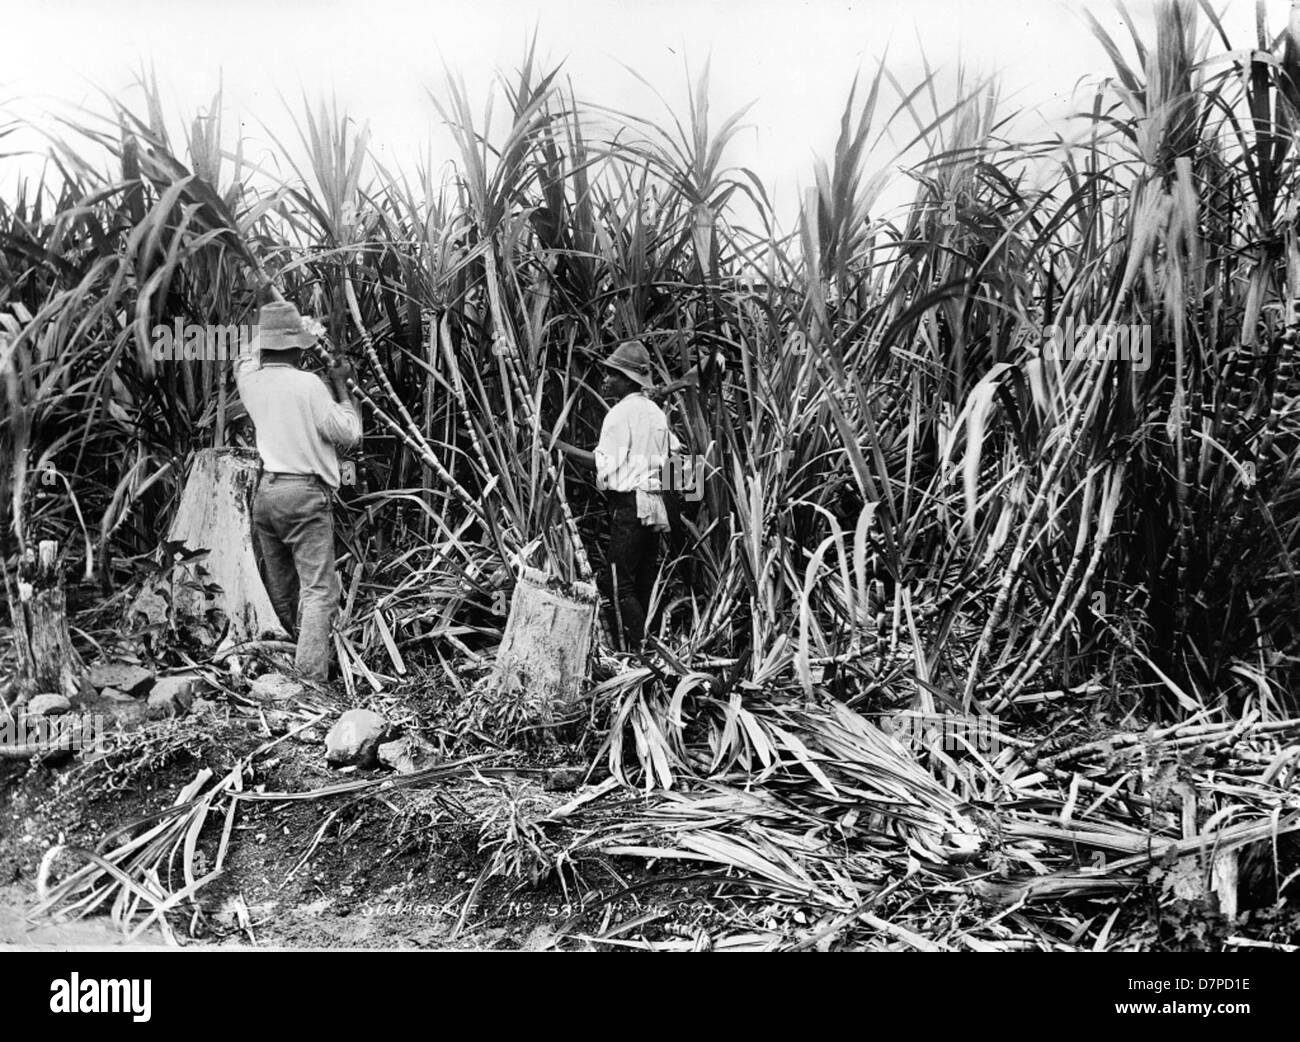 Sugarcane Black and White Stock Photos & Images - Alamy